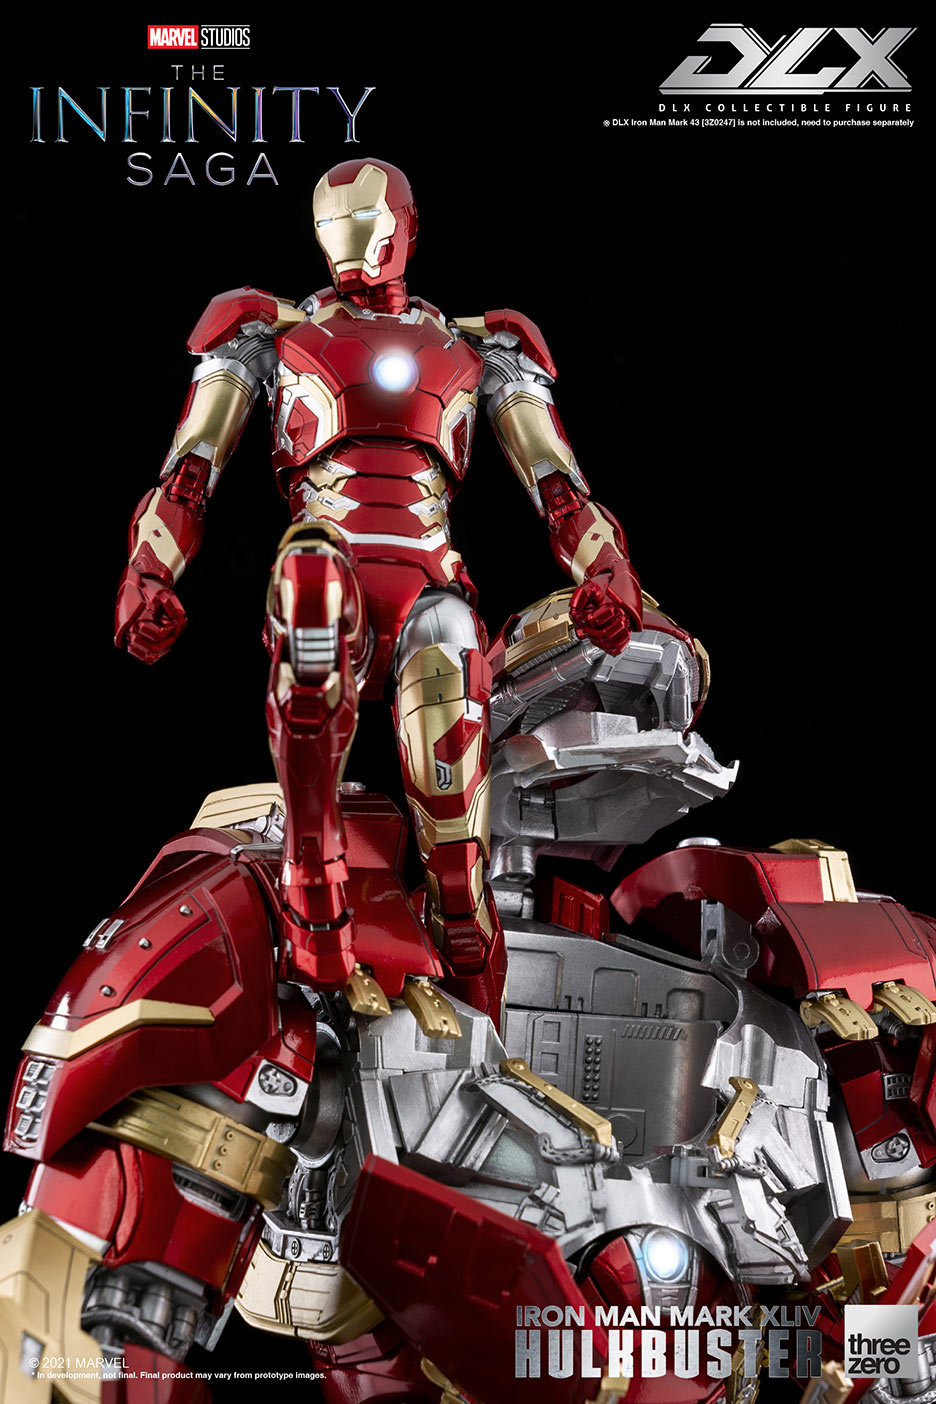 Marvel Studios: The Infinity SagaDLX Iron Man Mark 44 “Hulkbuster 